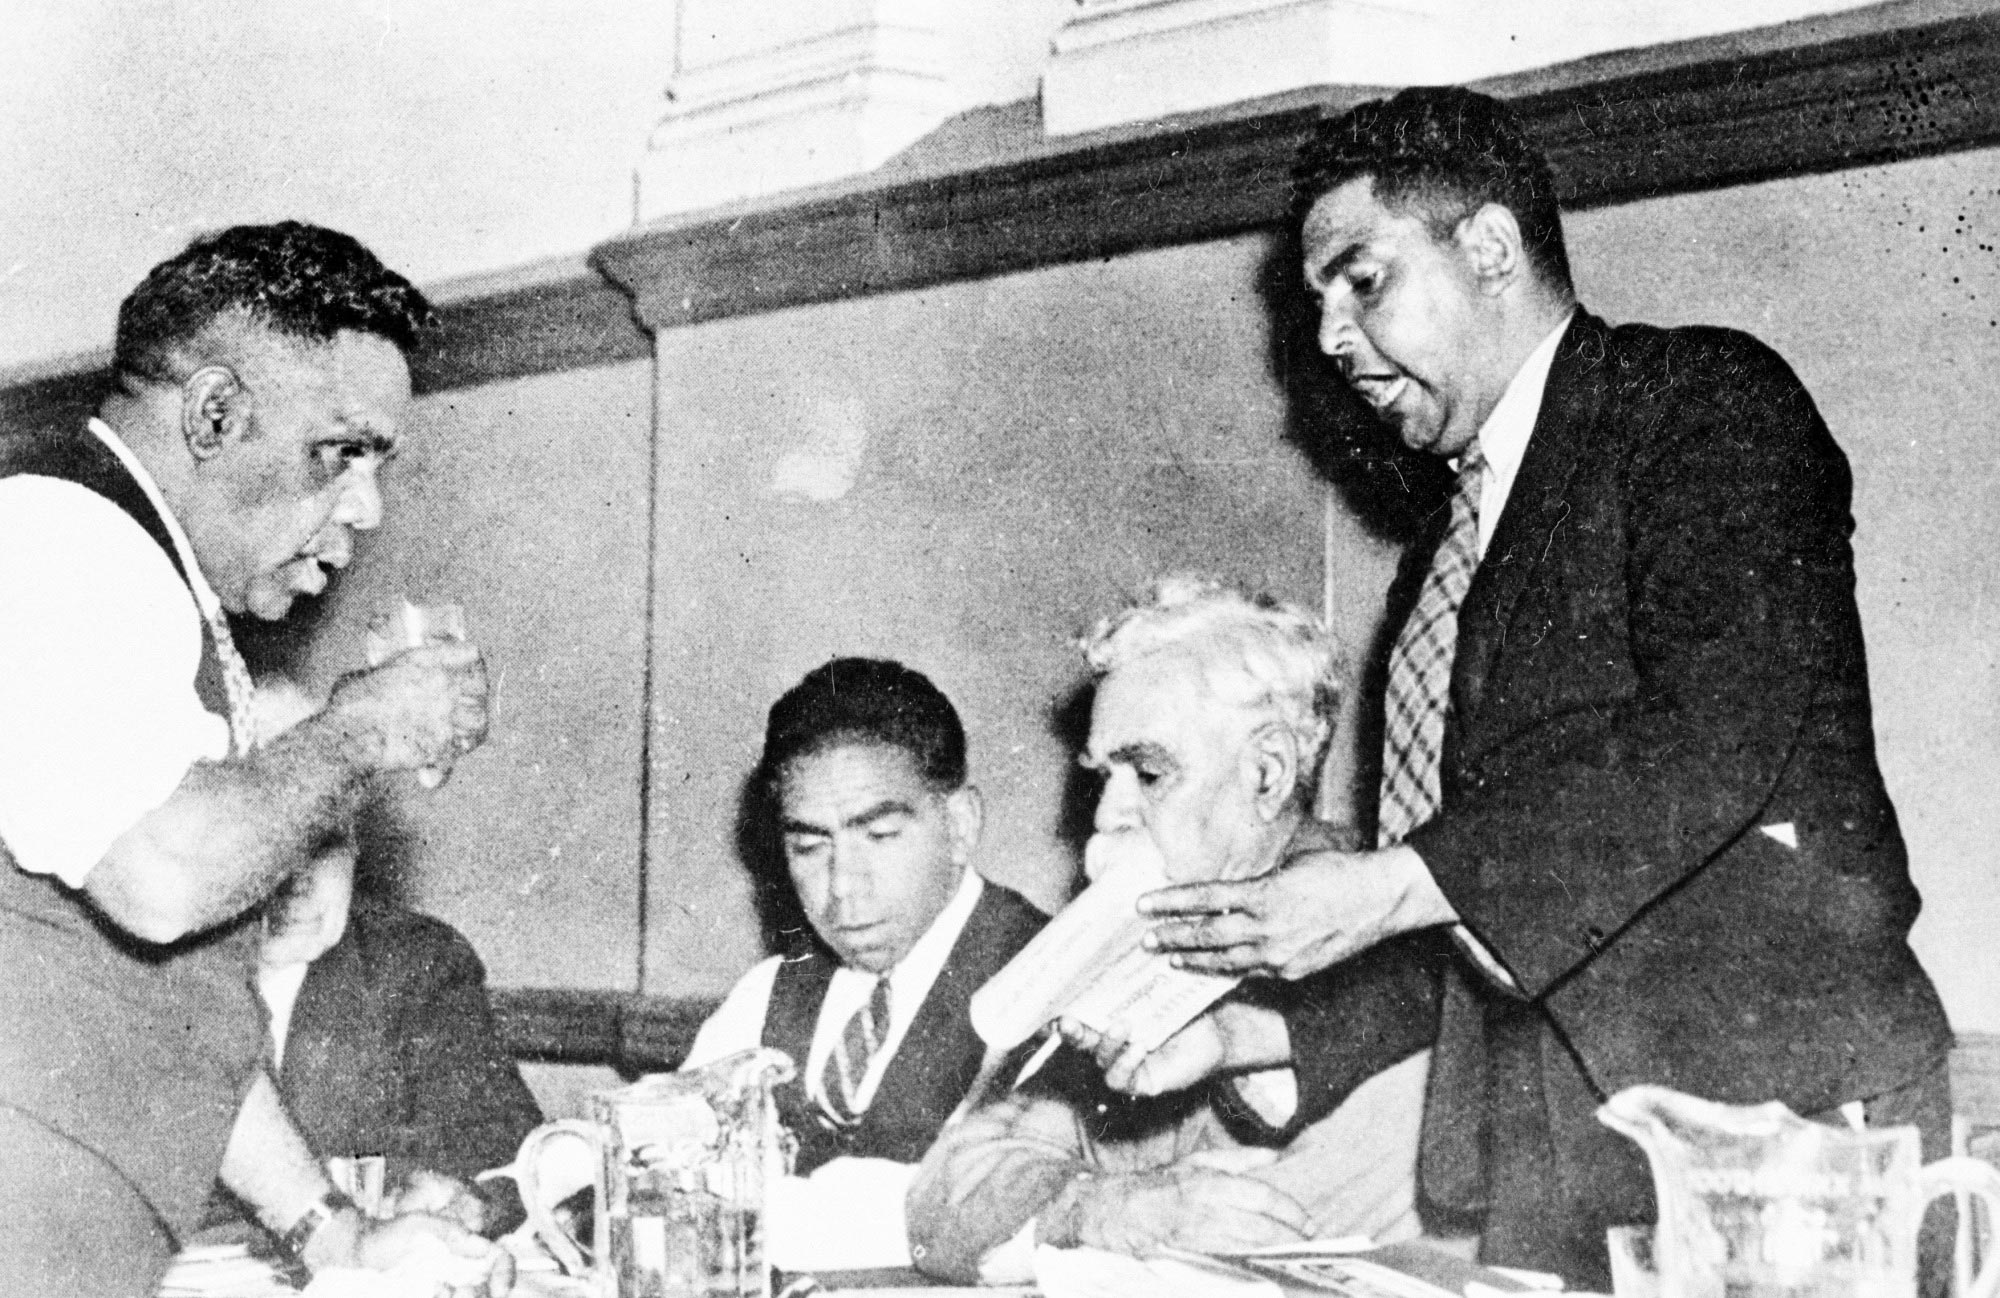 Aboriginal rights activists Tom Foster, Jack Kinchela, Douglas Nicholls, William Cooper and John Patten discuss a resolution, 1938.